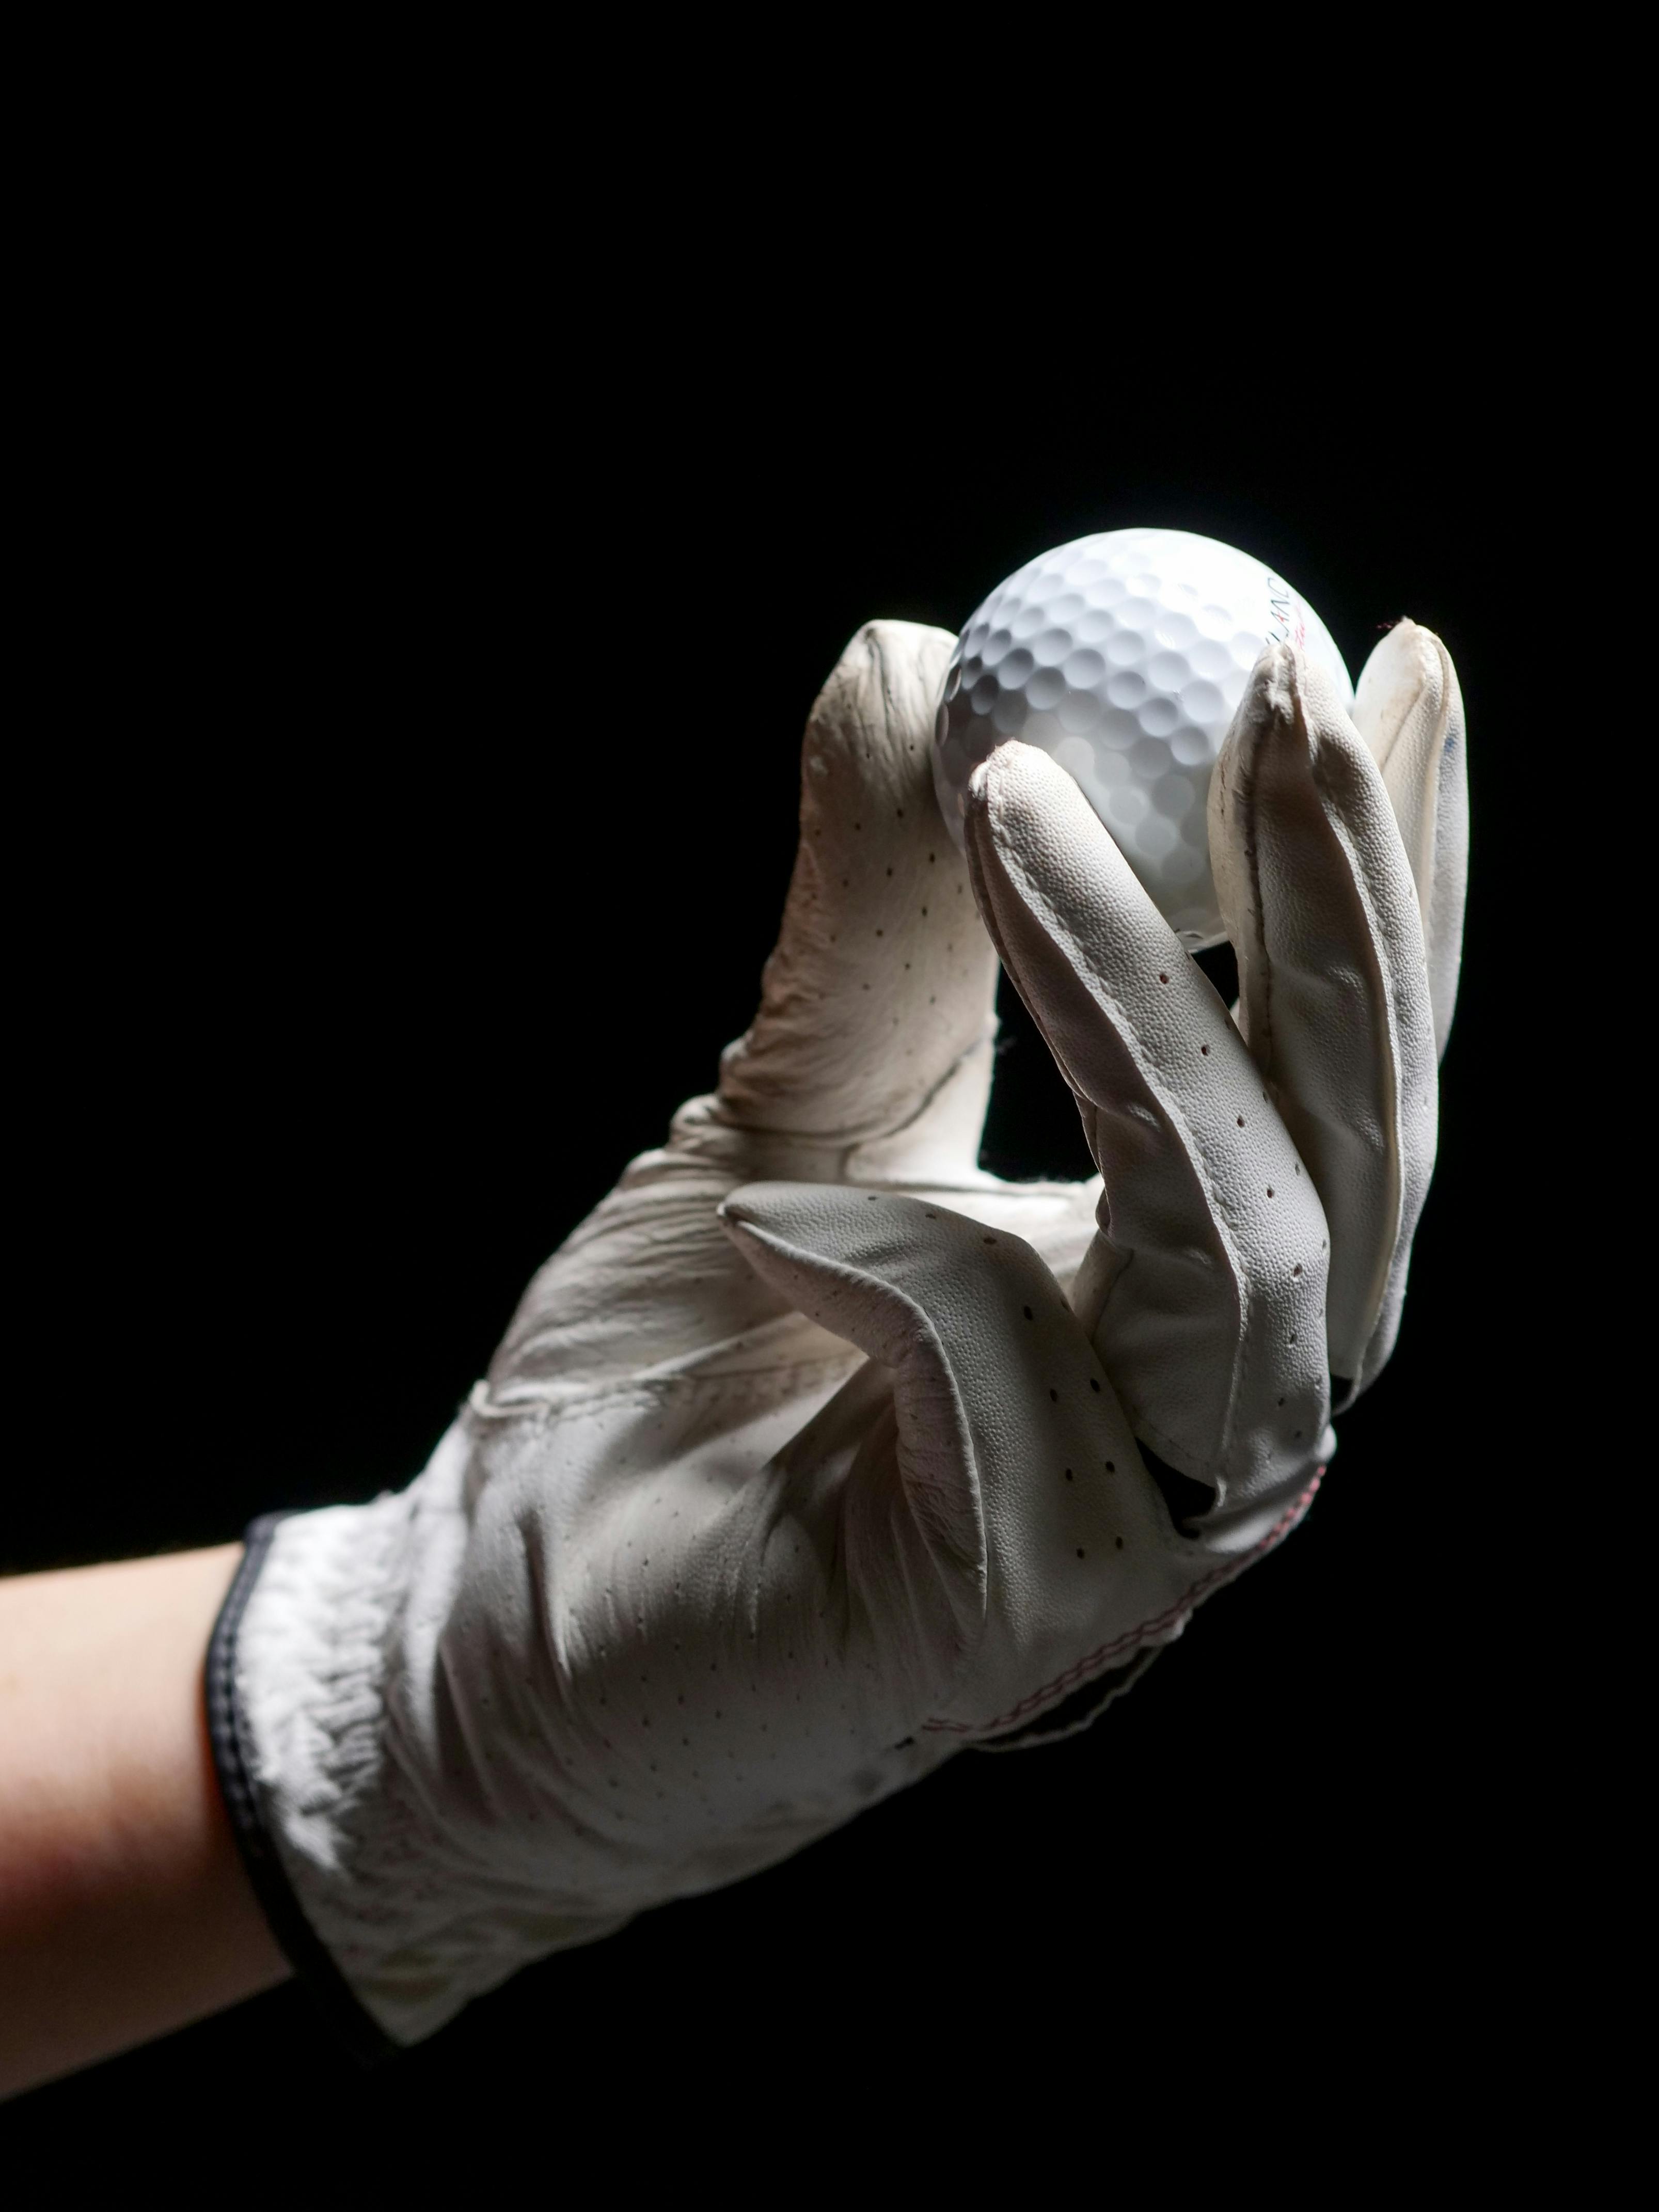 a person holding a golf ball